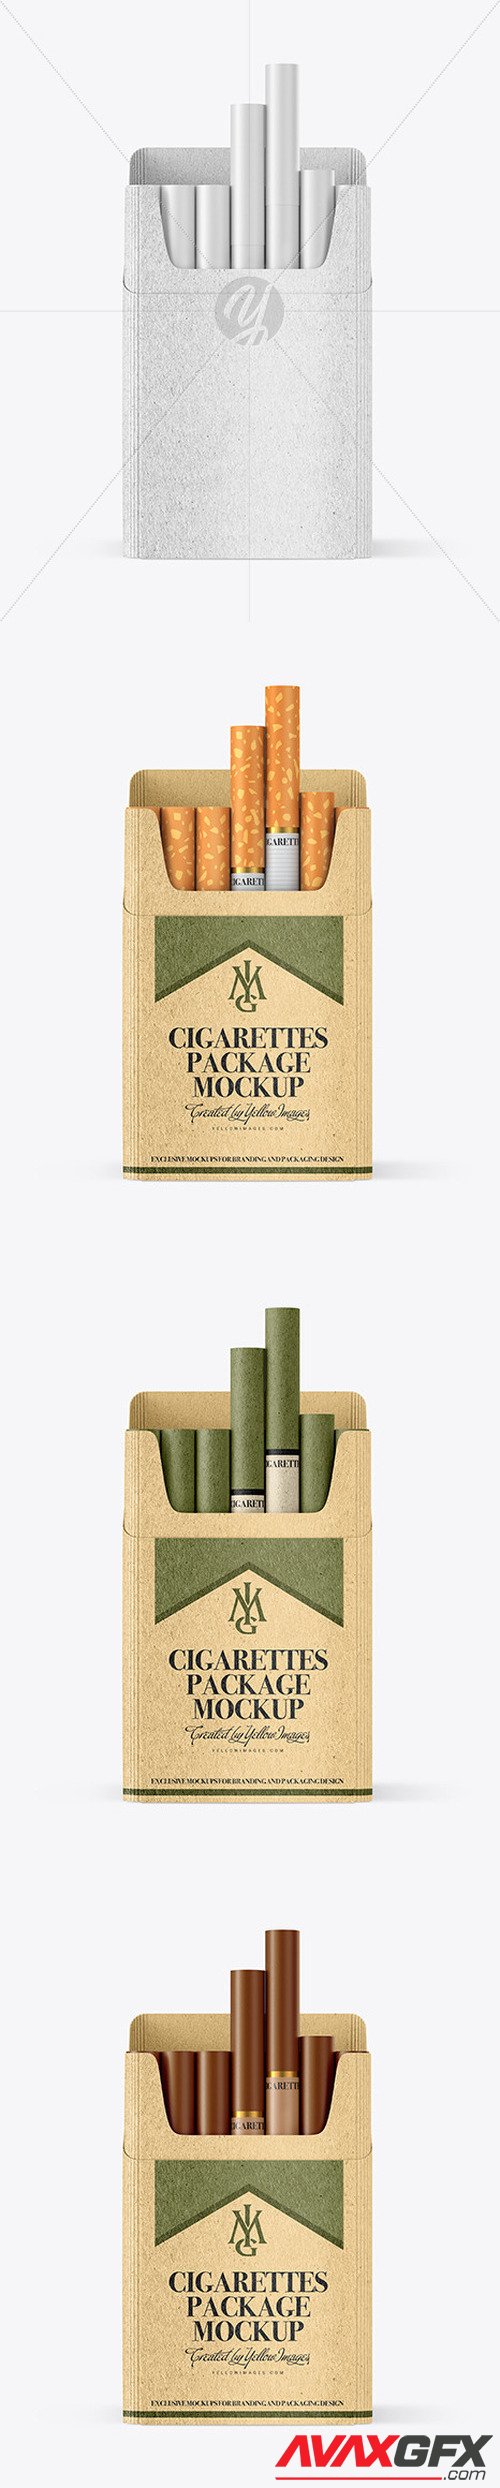 Kraft Cigarette Pack Mockup 56394 TIF